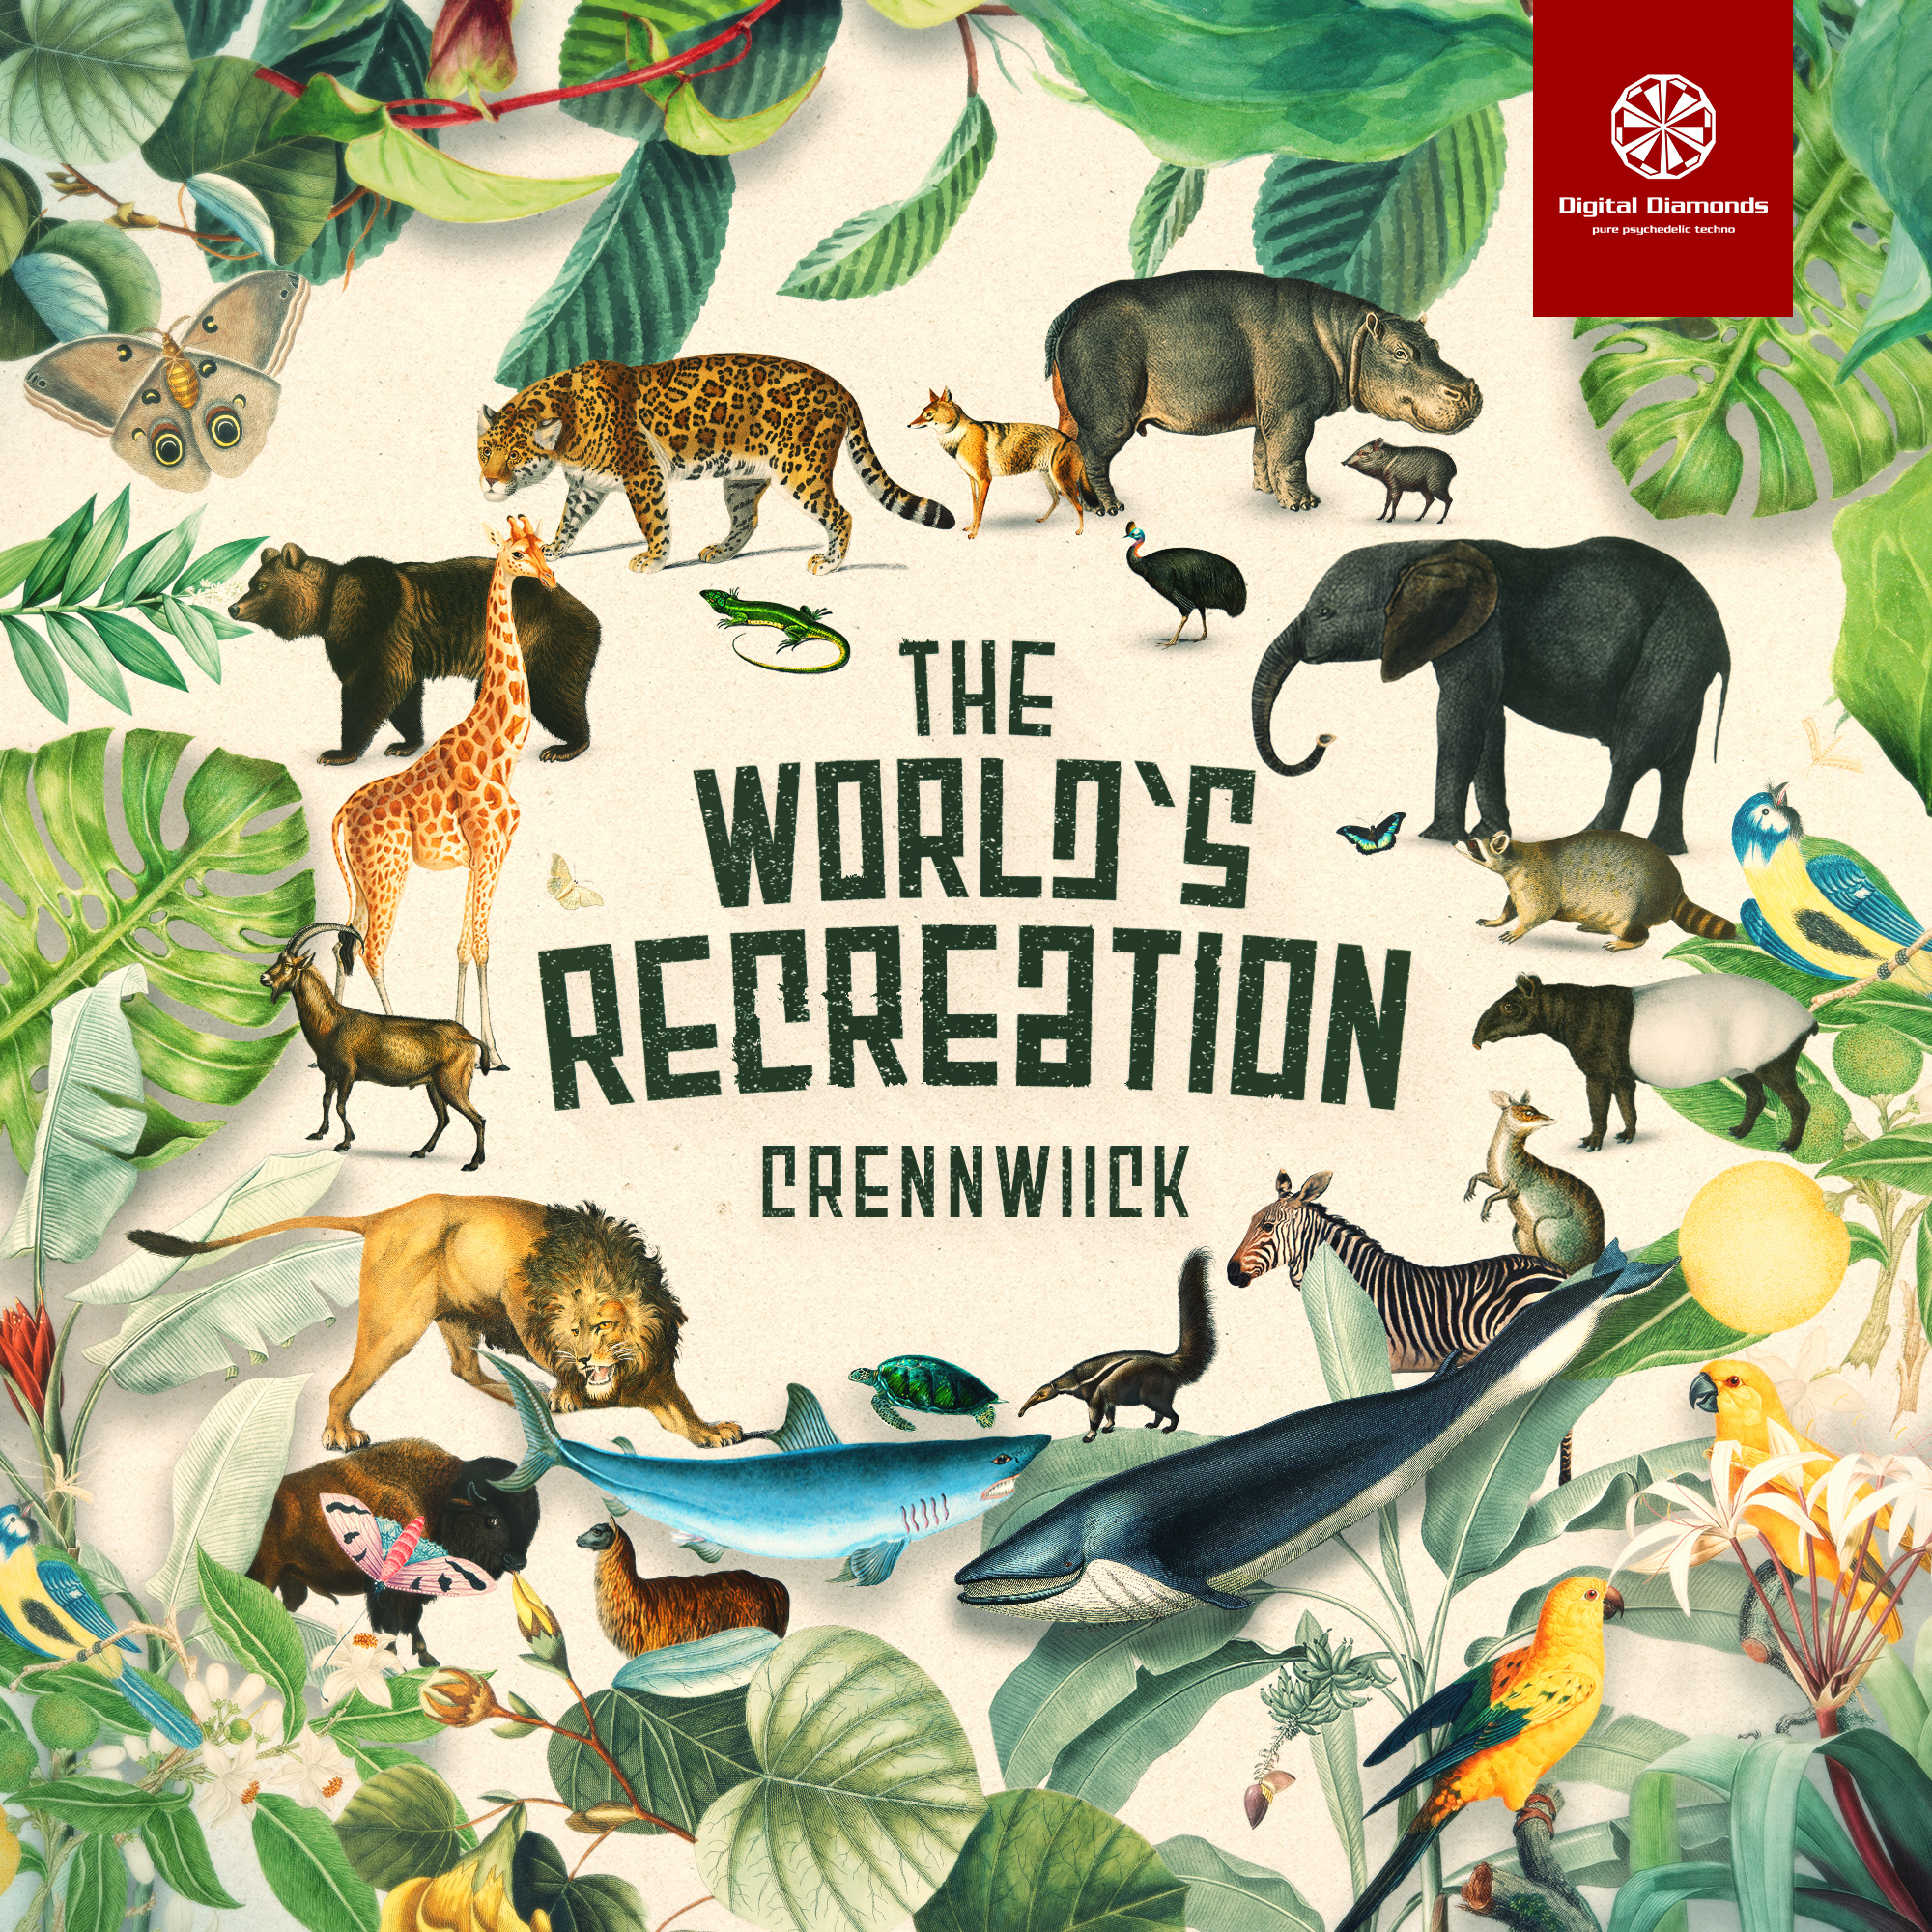 Crennwiick – The World's Recreation